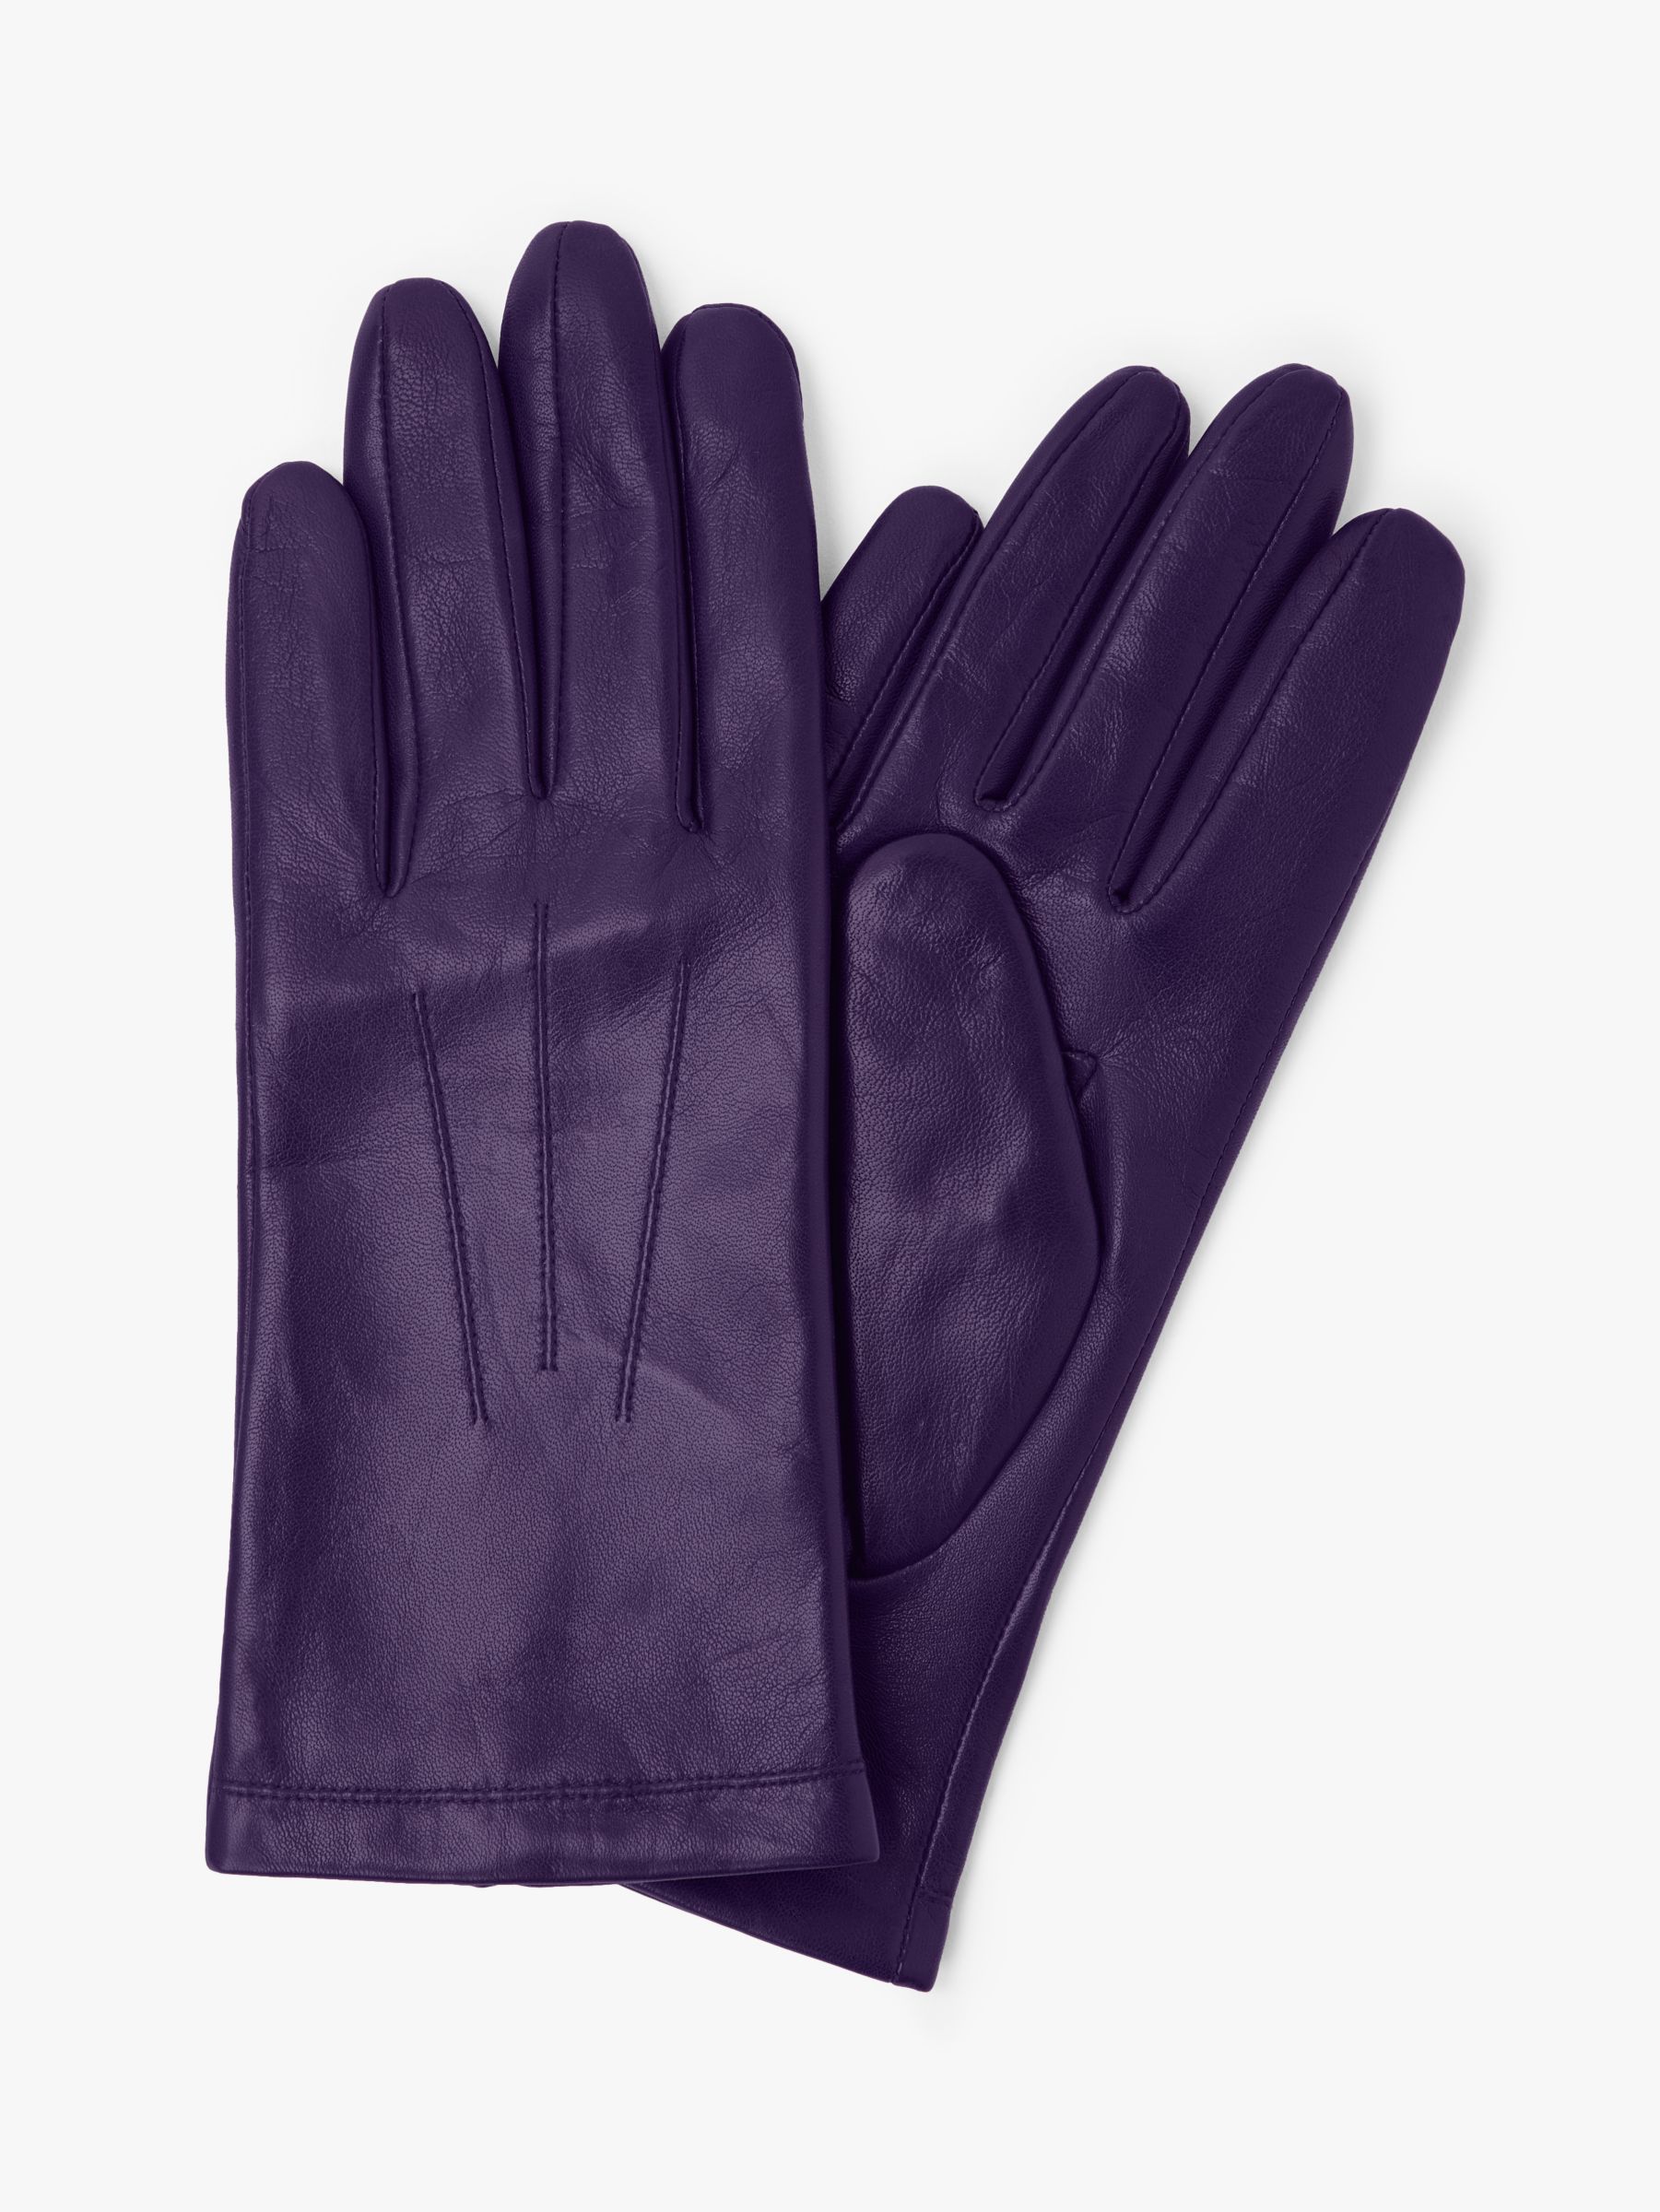 John Lewis & Partners Genuine Leather Gloves